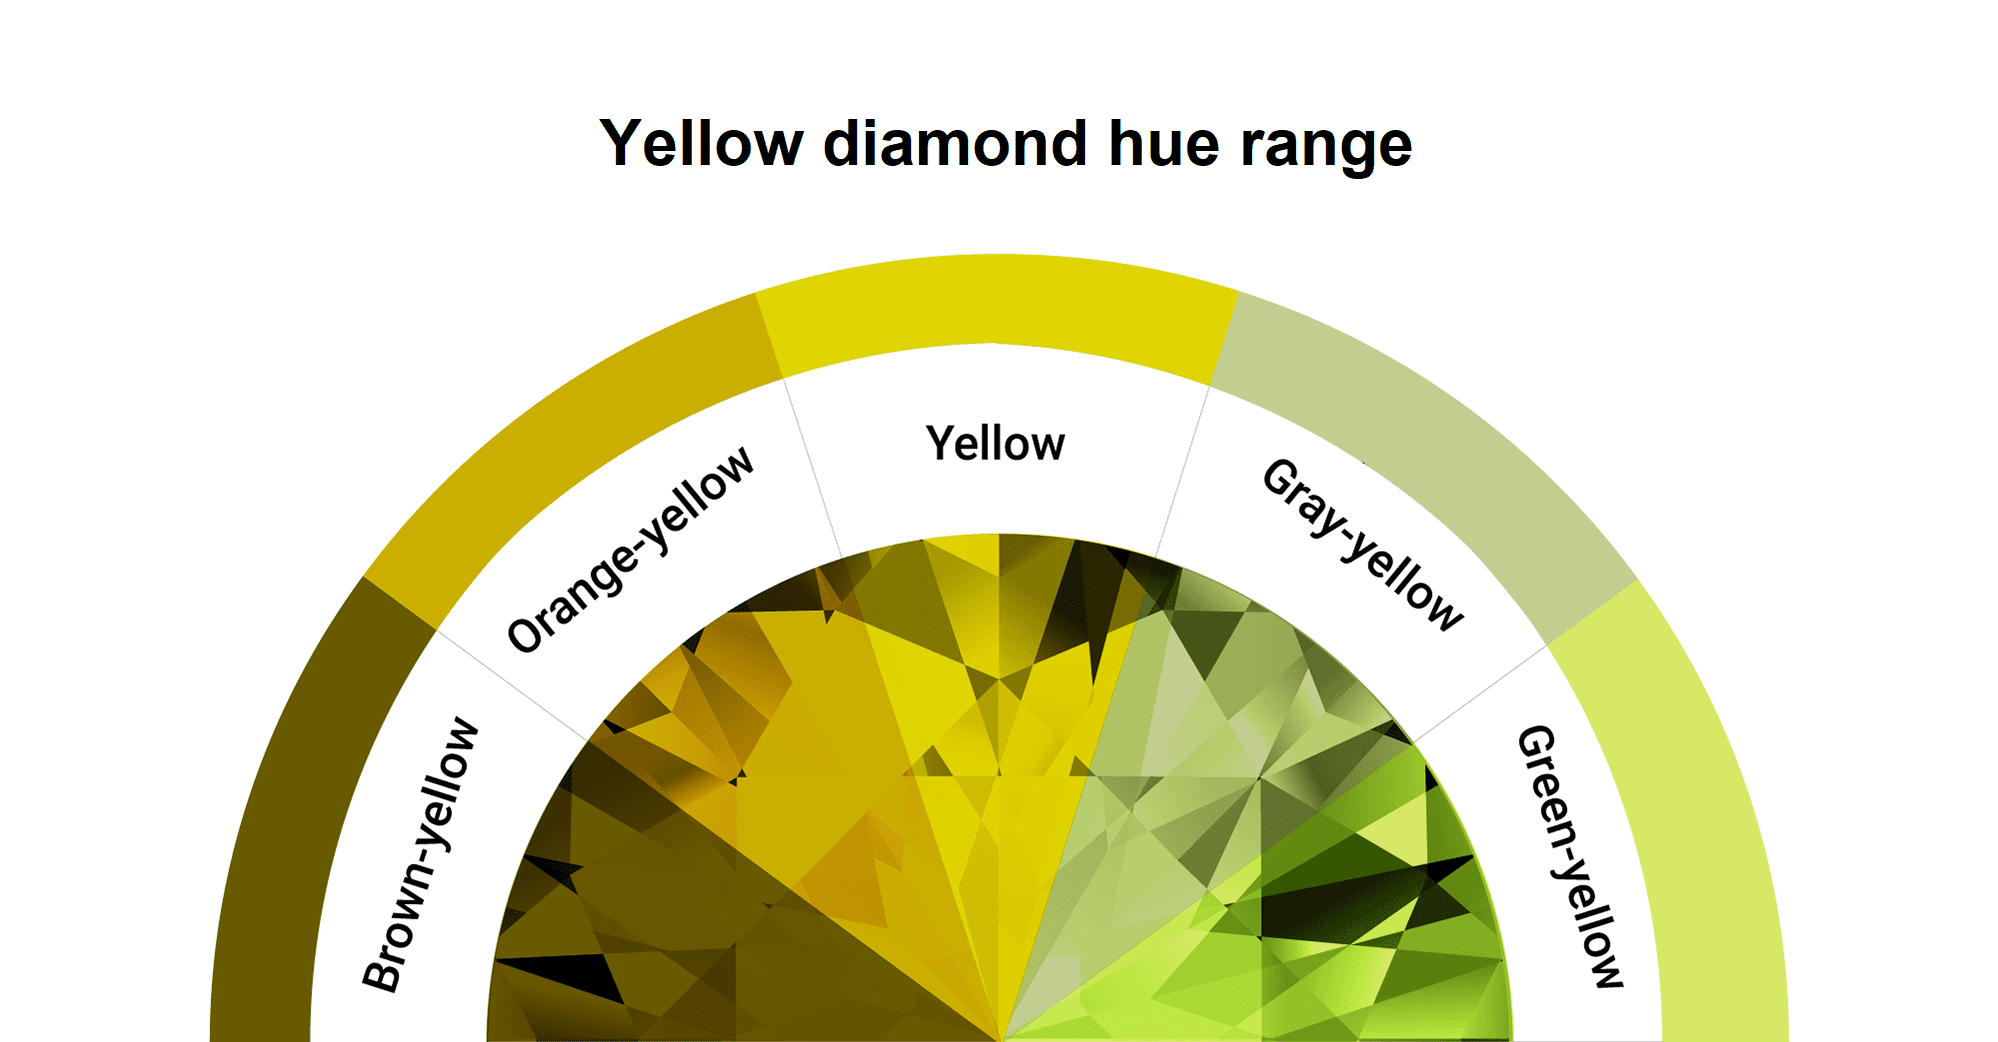 Yellow diamond hue range